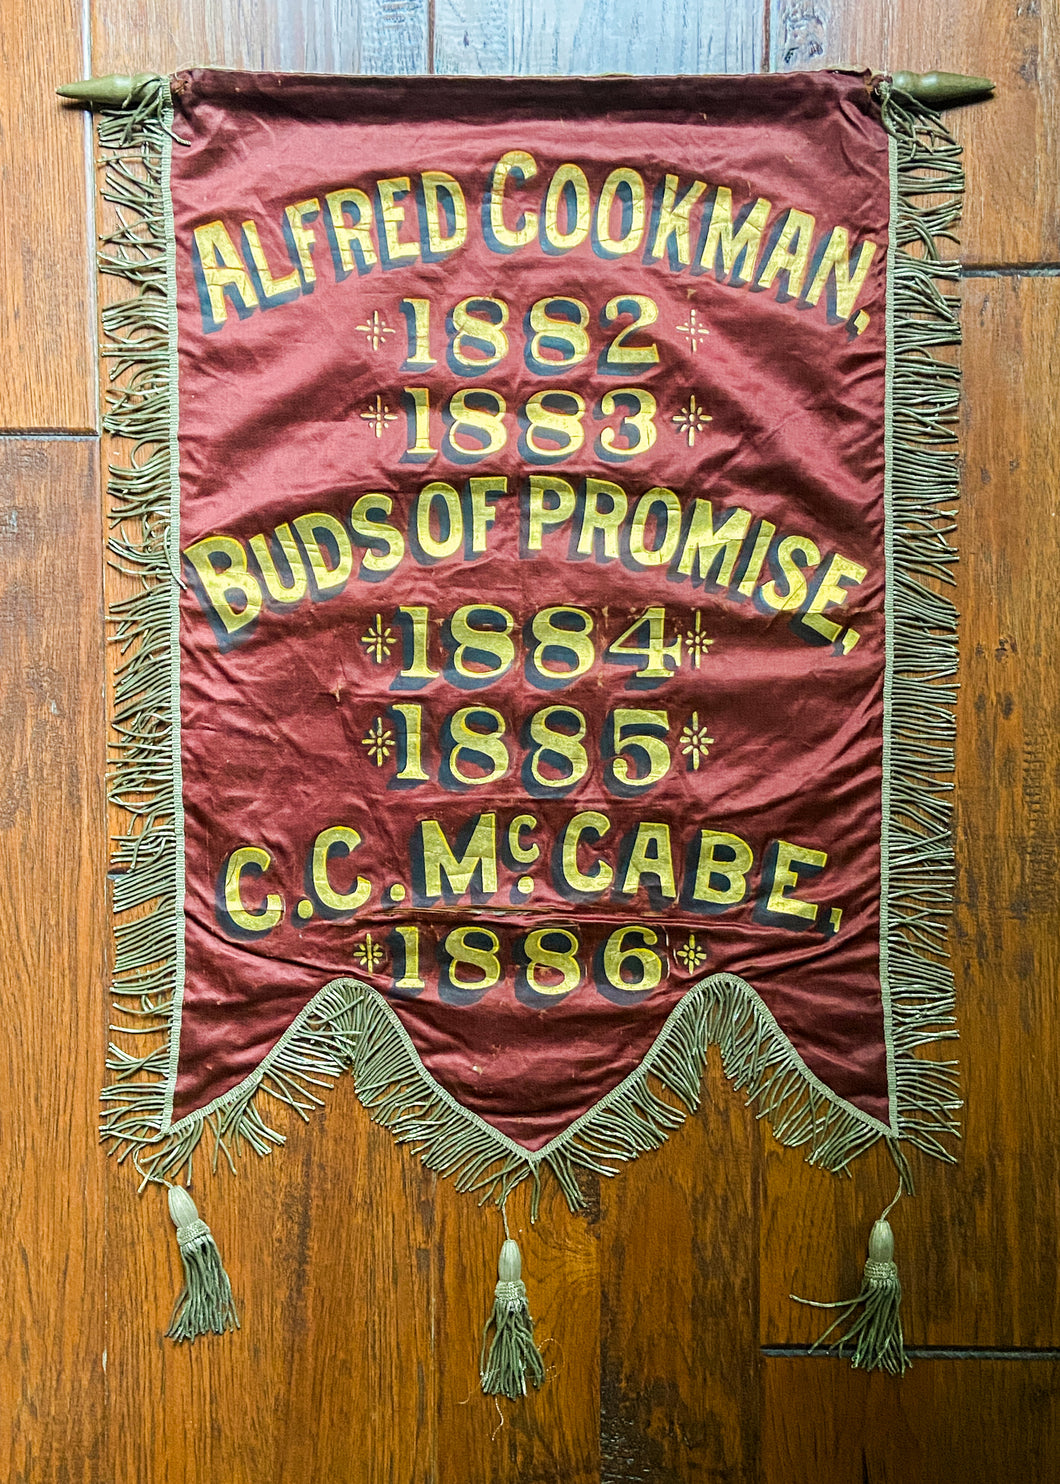 1886 METHODIST. 20 x 26 Handpainted Methodist - Holiness Banner from Methodist Convention.